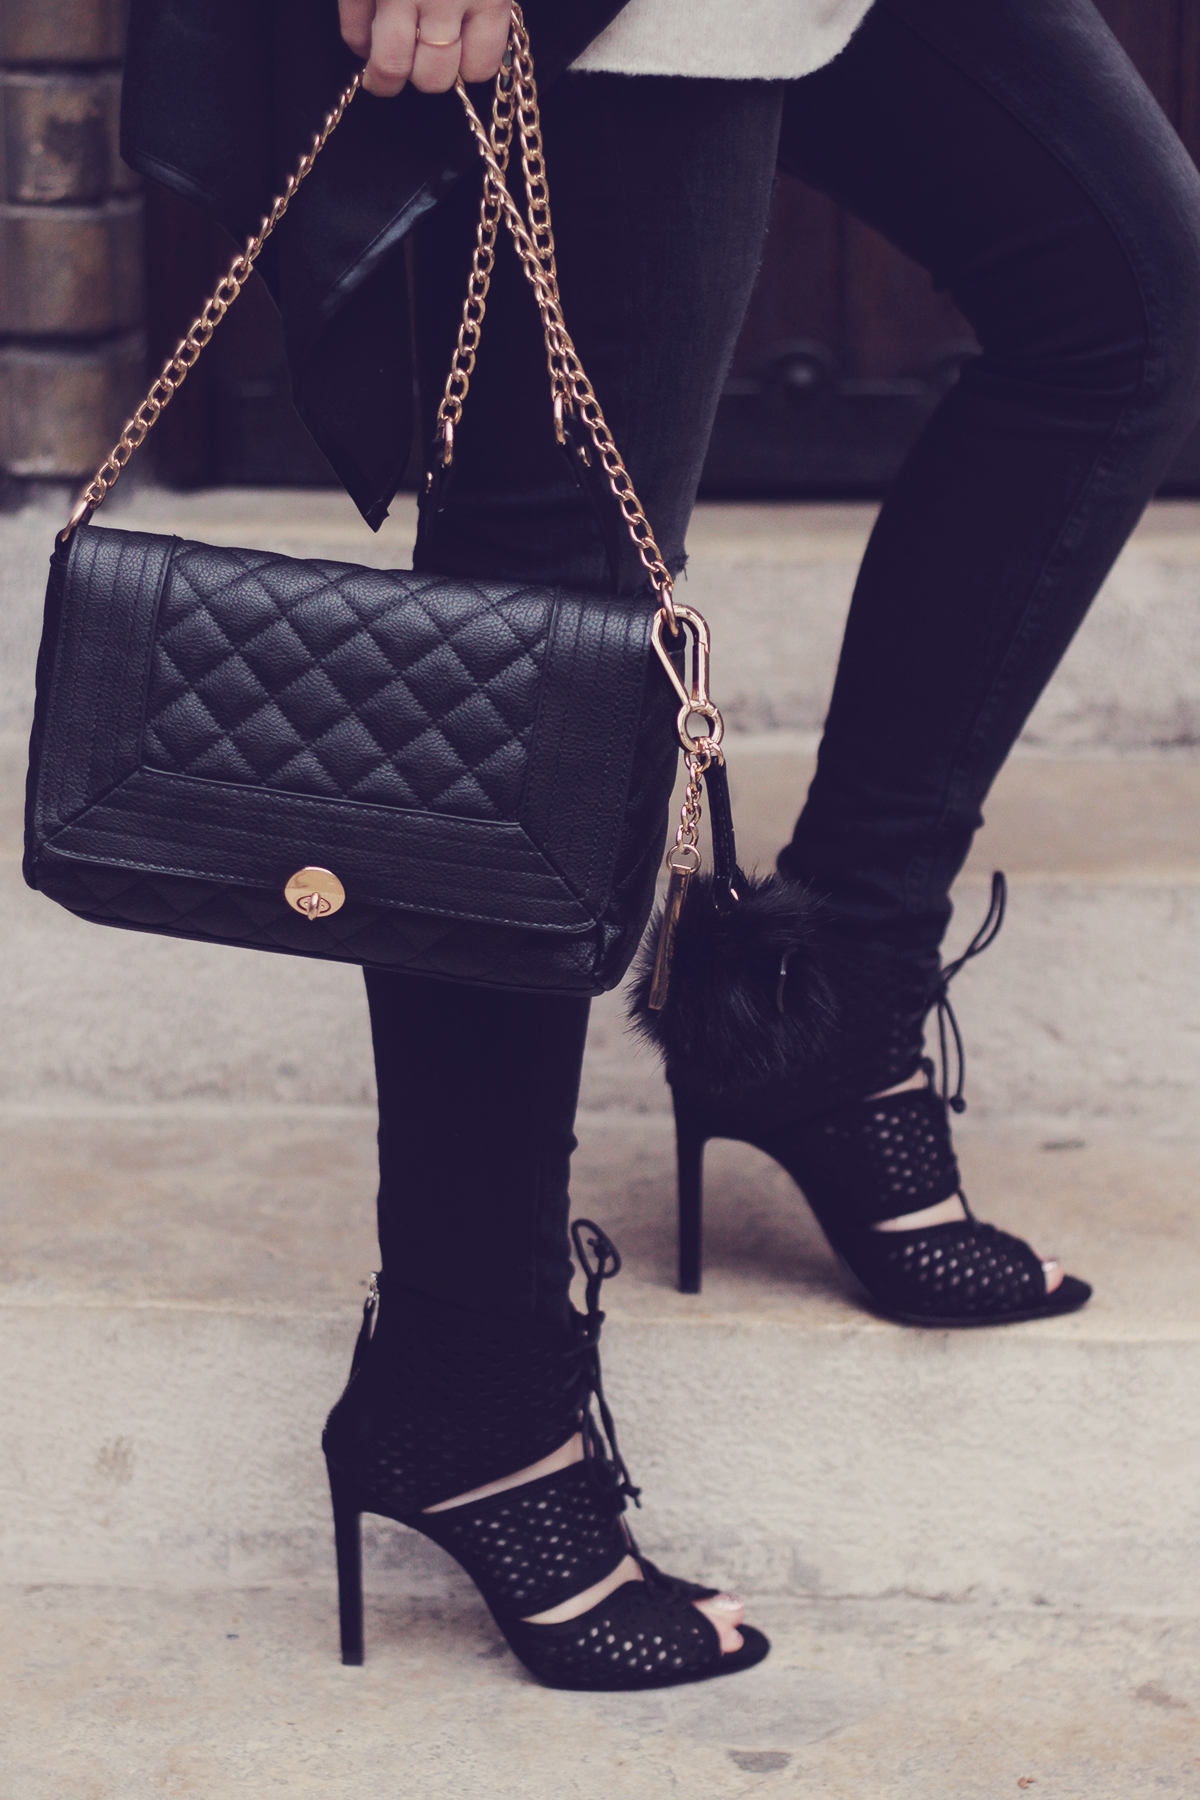 black cut high-heeled sandals and chain purse